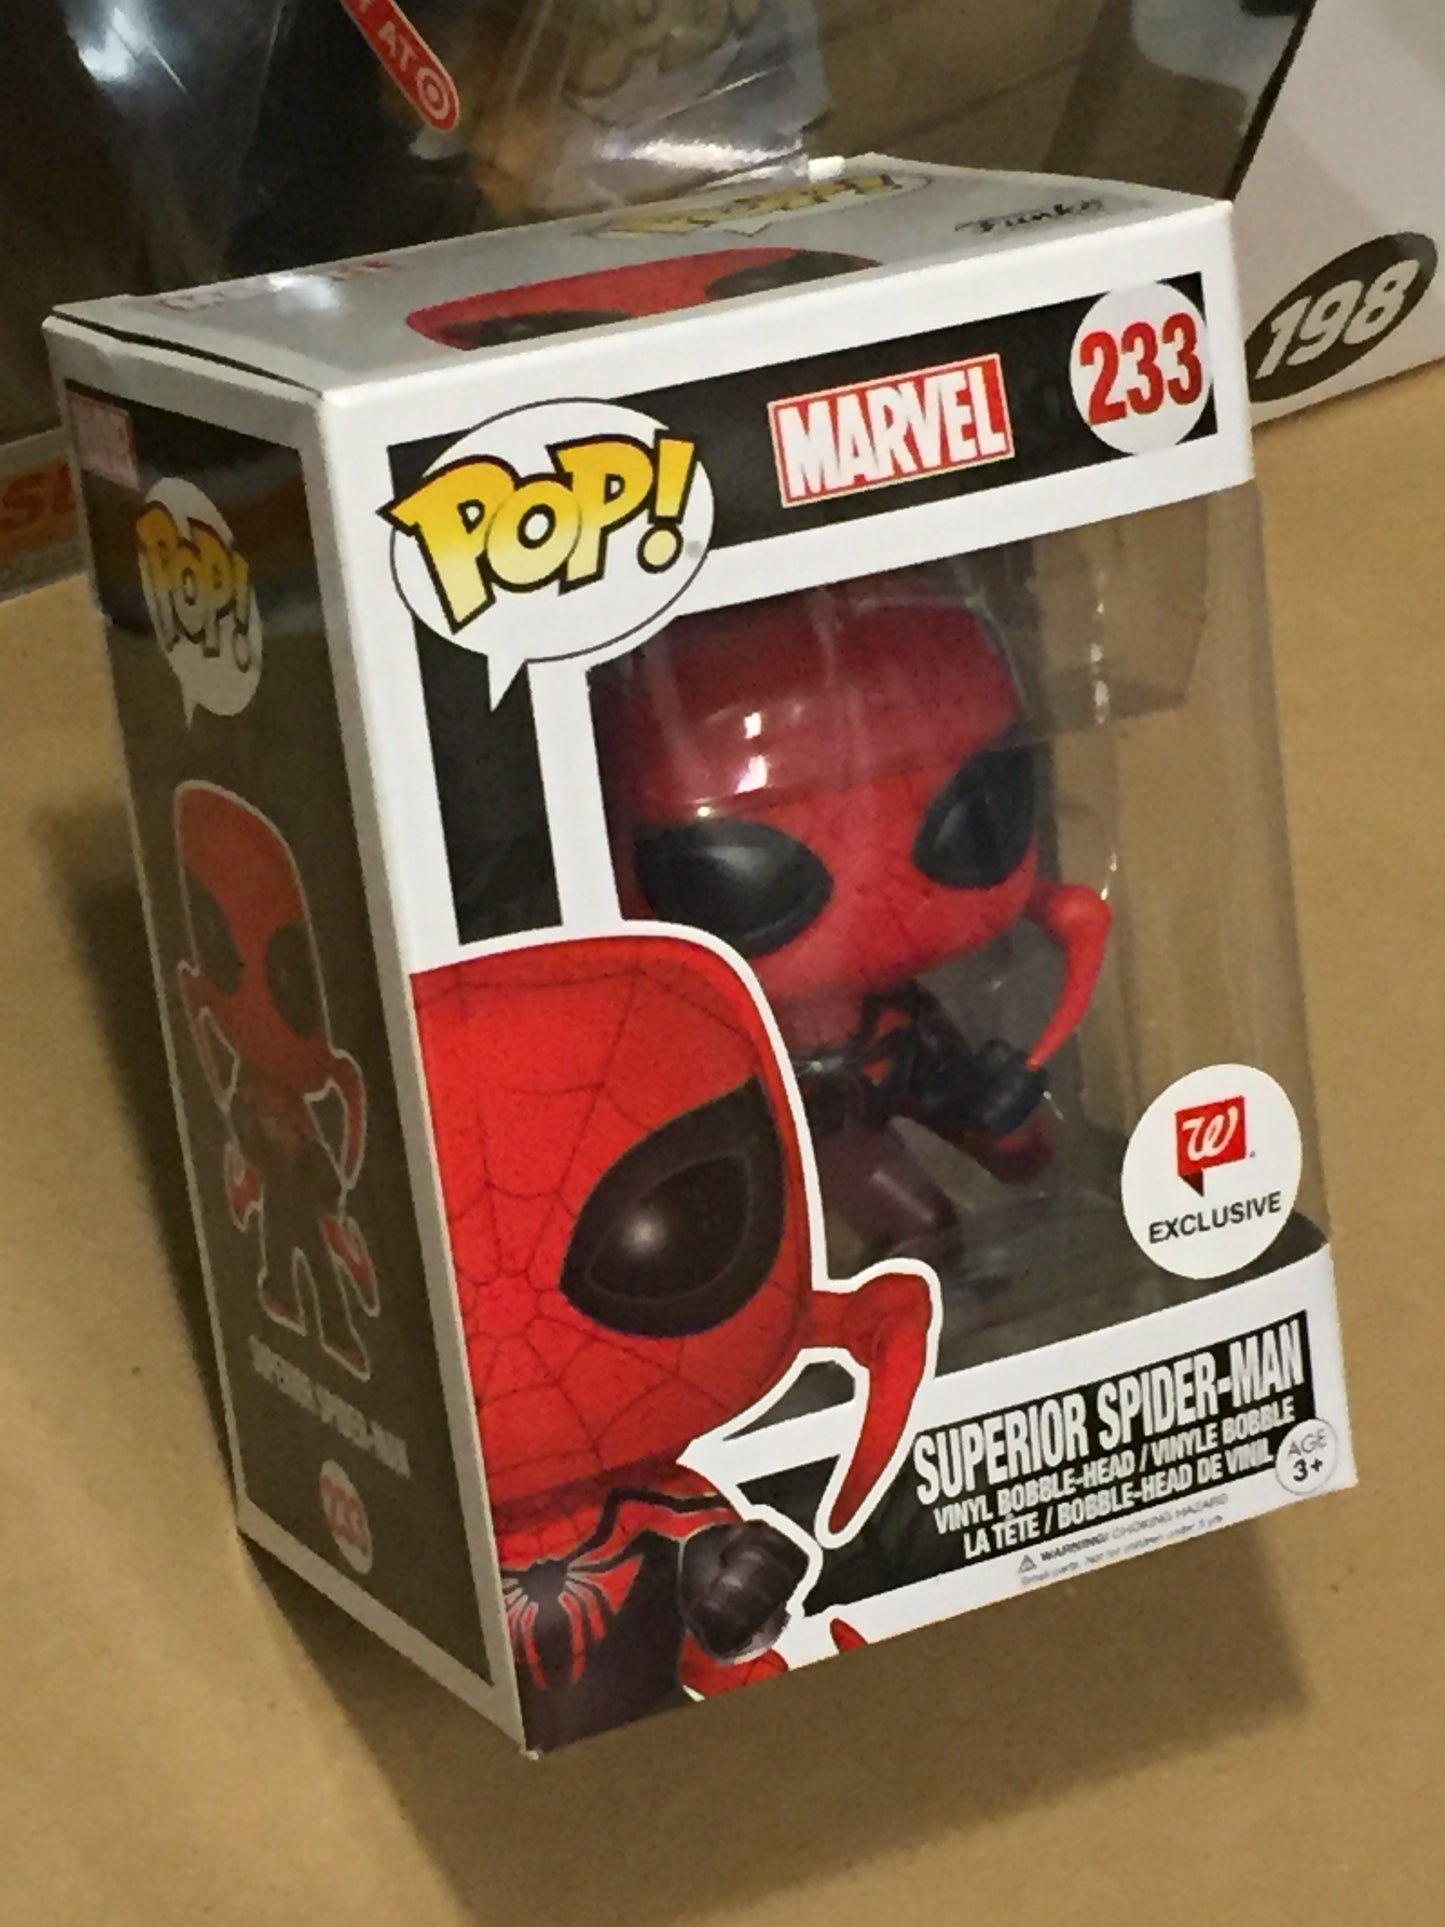 Marvel Superior Spider-Man Exclusive Funko Pop! Vinyl figure